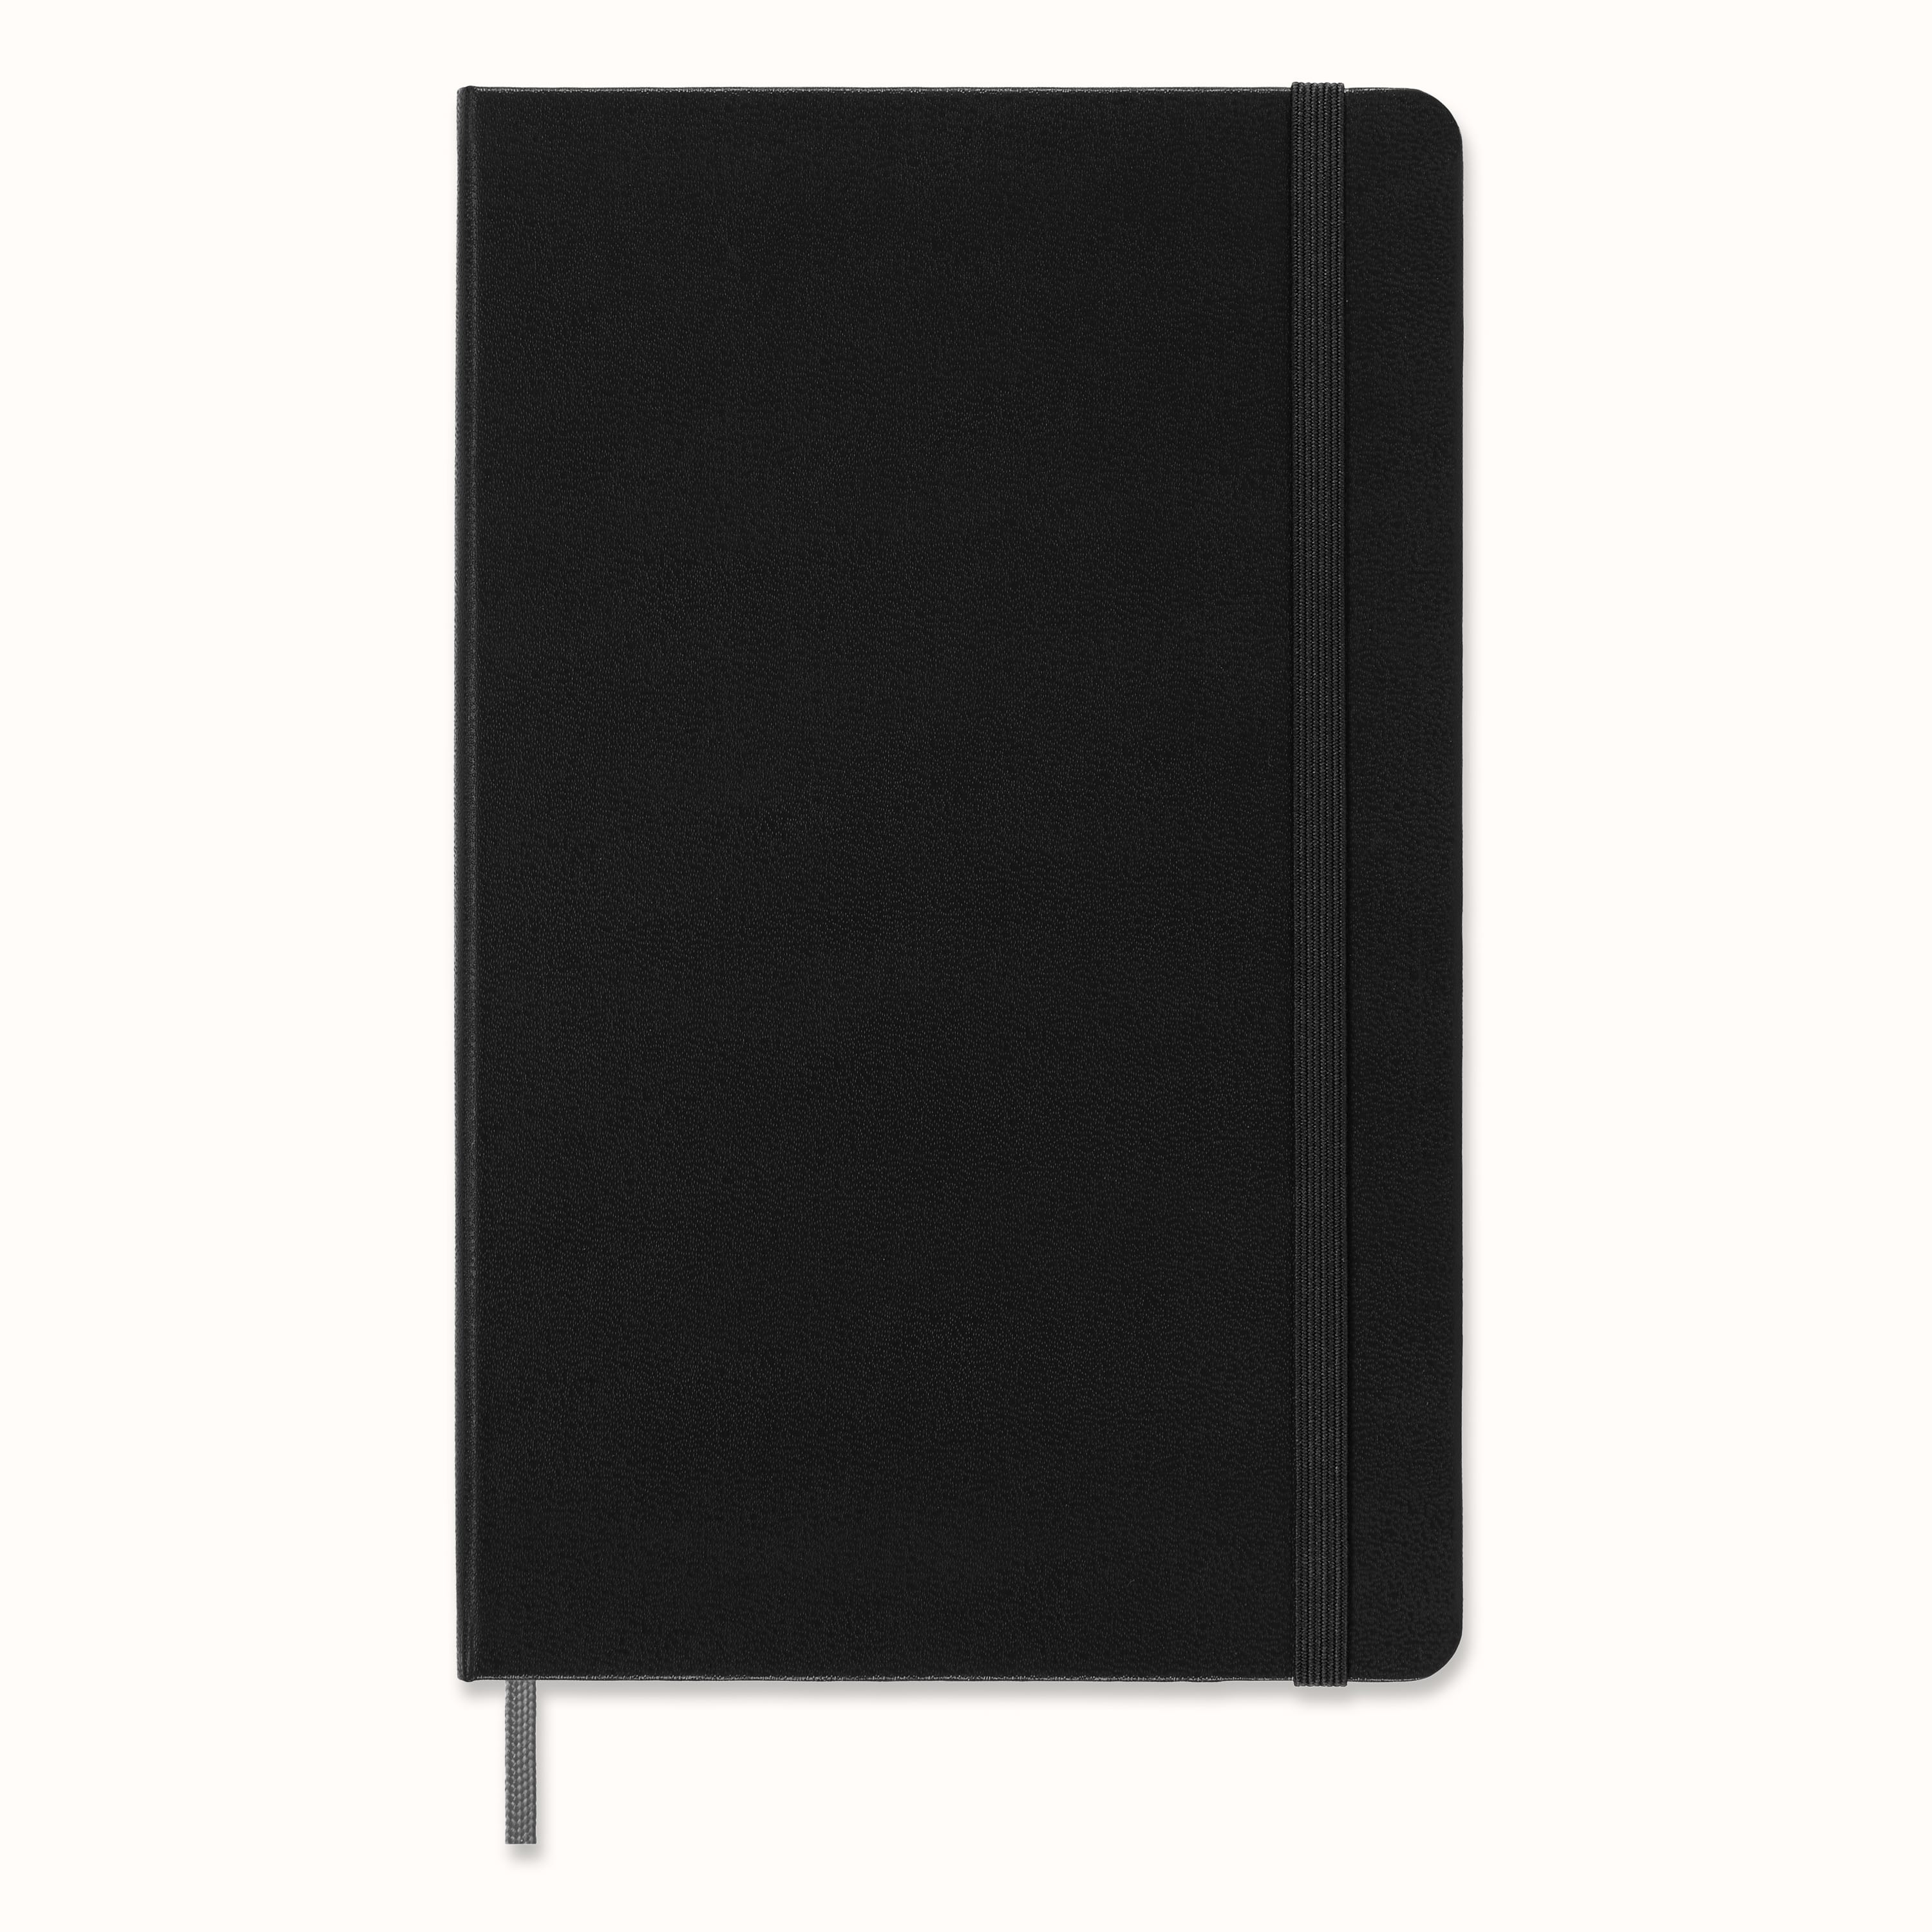 176 Pages & App & Organize Notes 7.5 x 9.75 Plain/Blank Moleskine Paper Tablet Hard Cover Smart Notebook XL Sold Separately Compatible w/ Moleskine Pen+ Ellipse Scarlet Red 